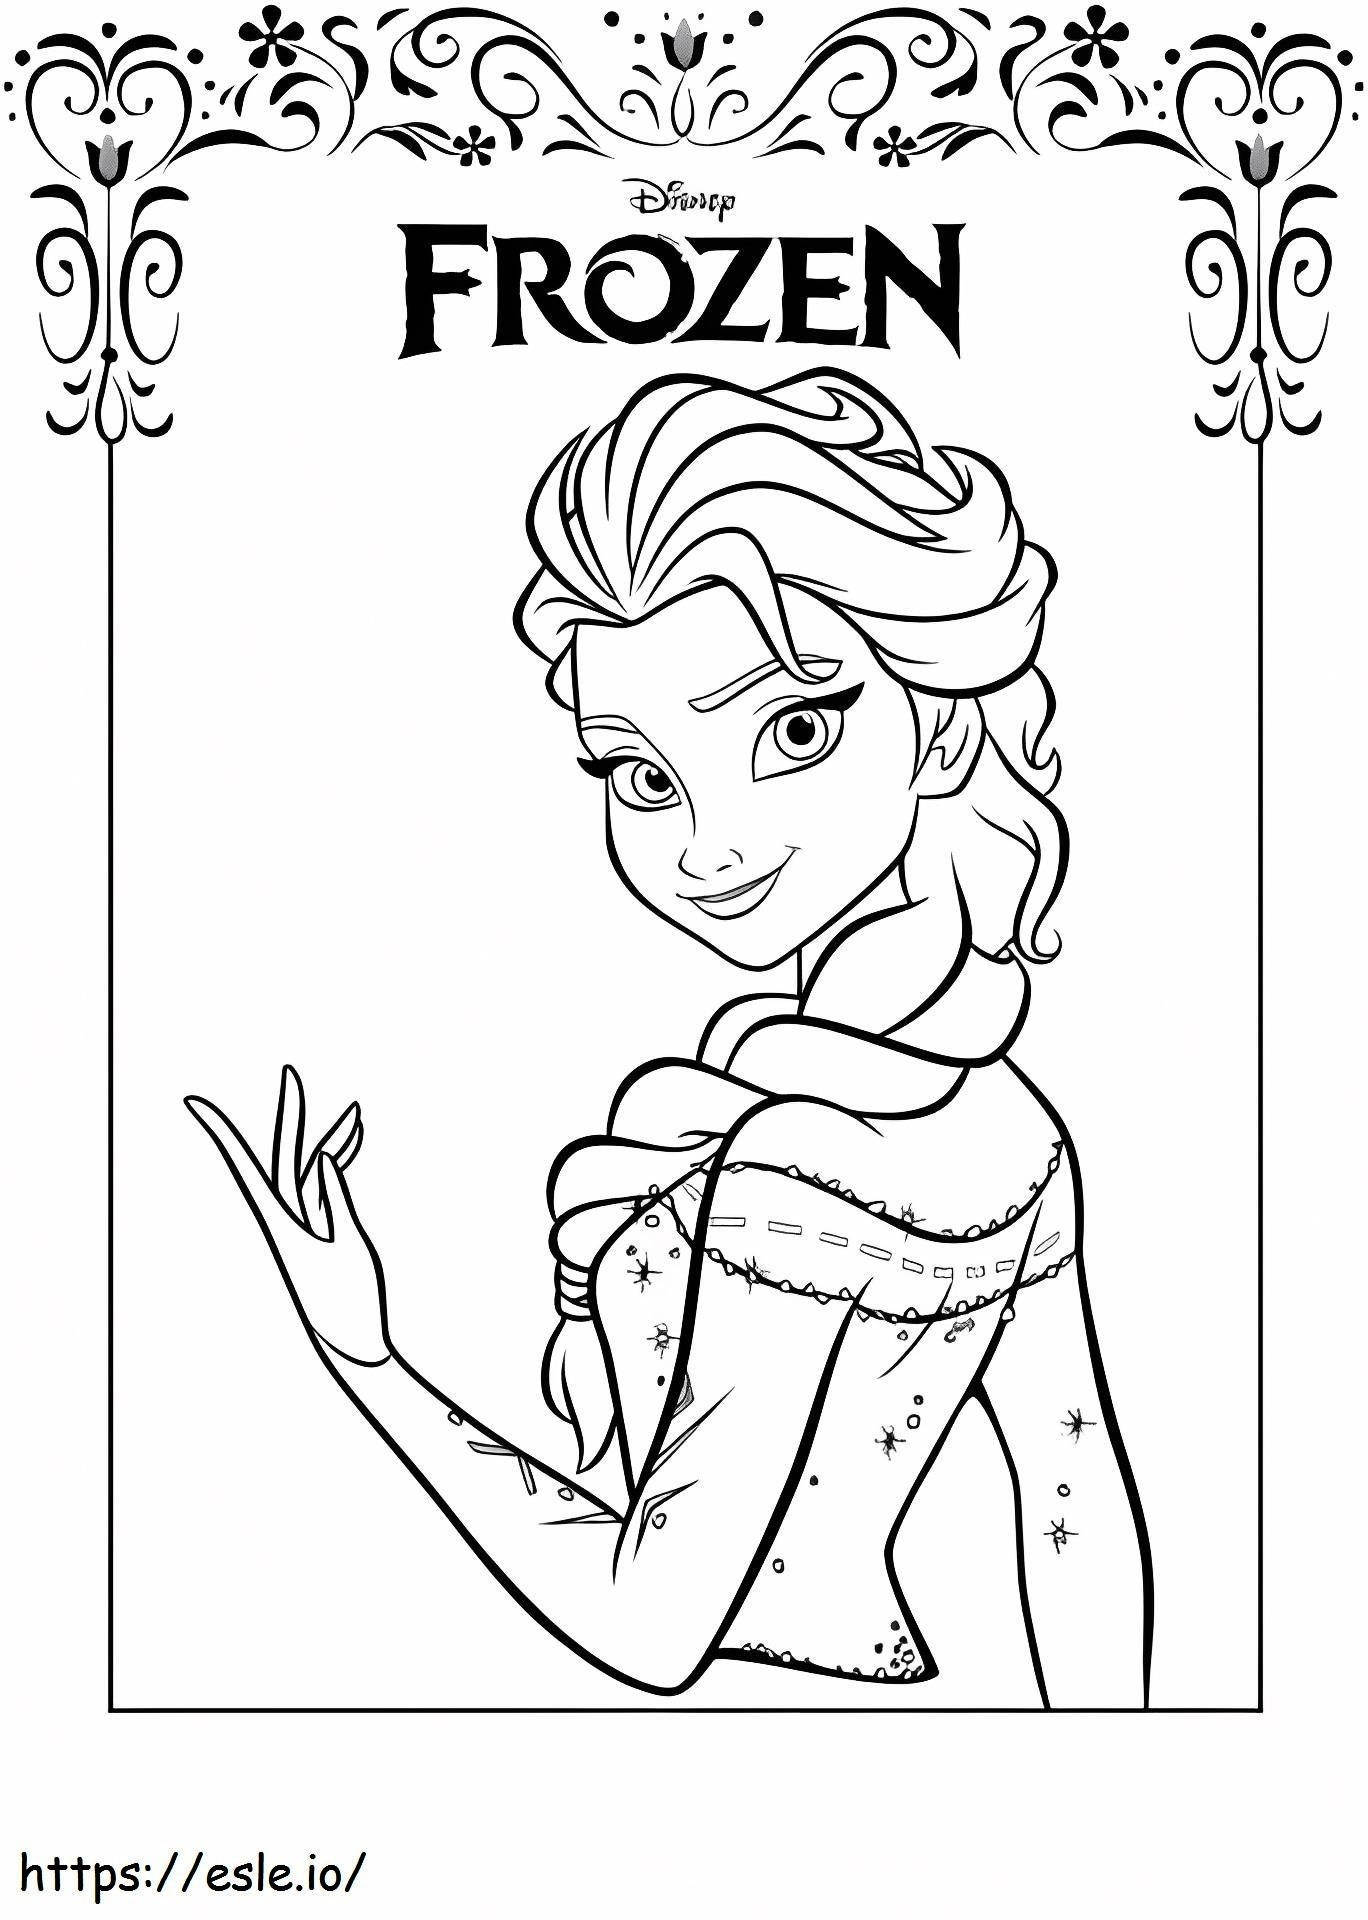 Frozen'dan Elsa boyama